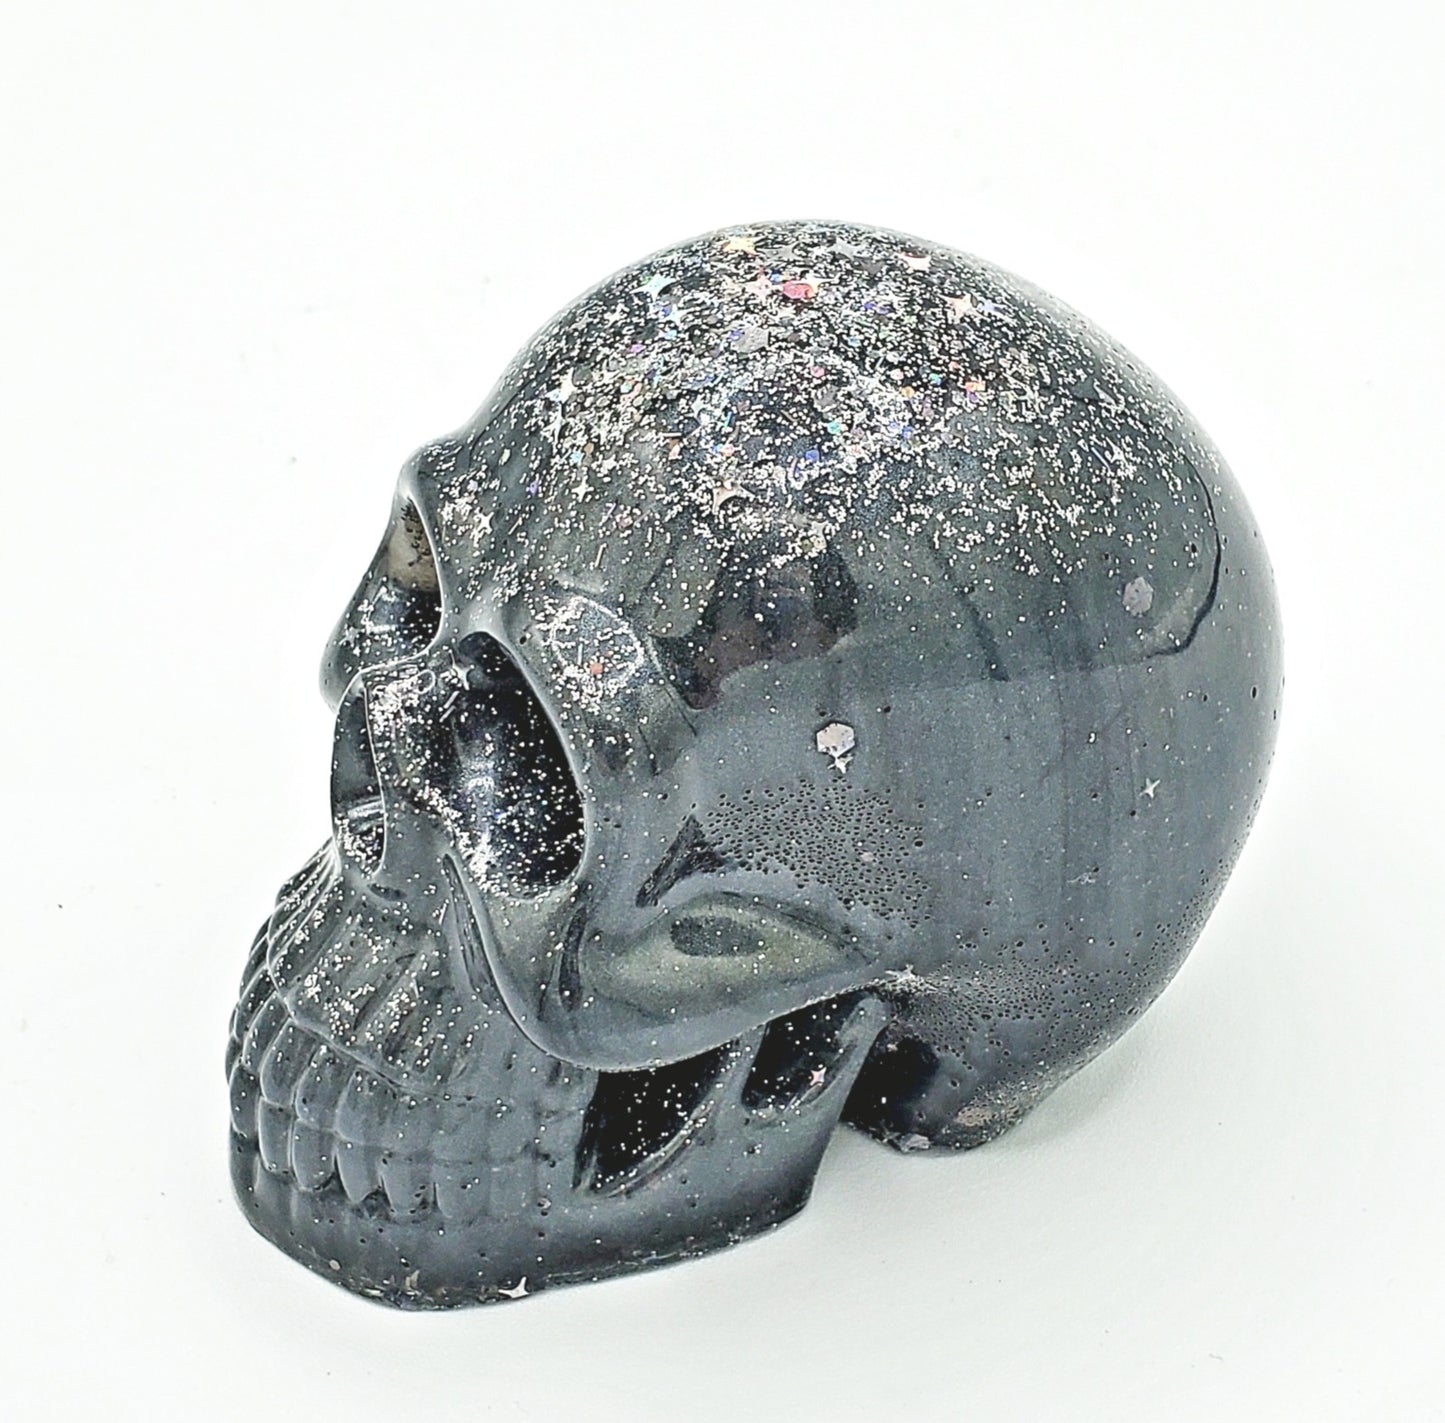 Midnight Glitz Skull Figurine